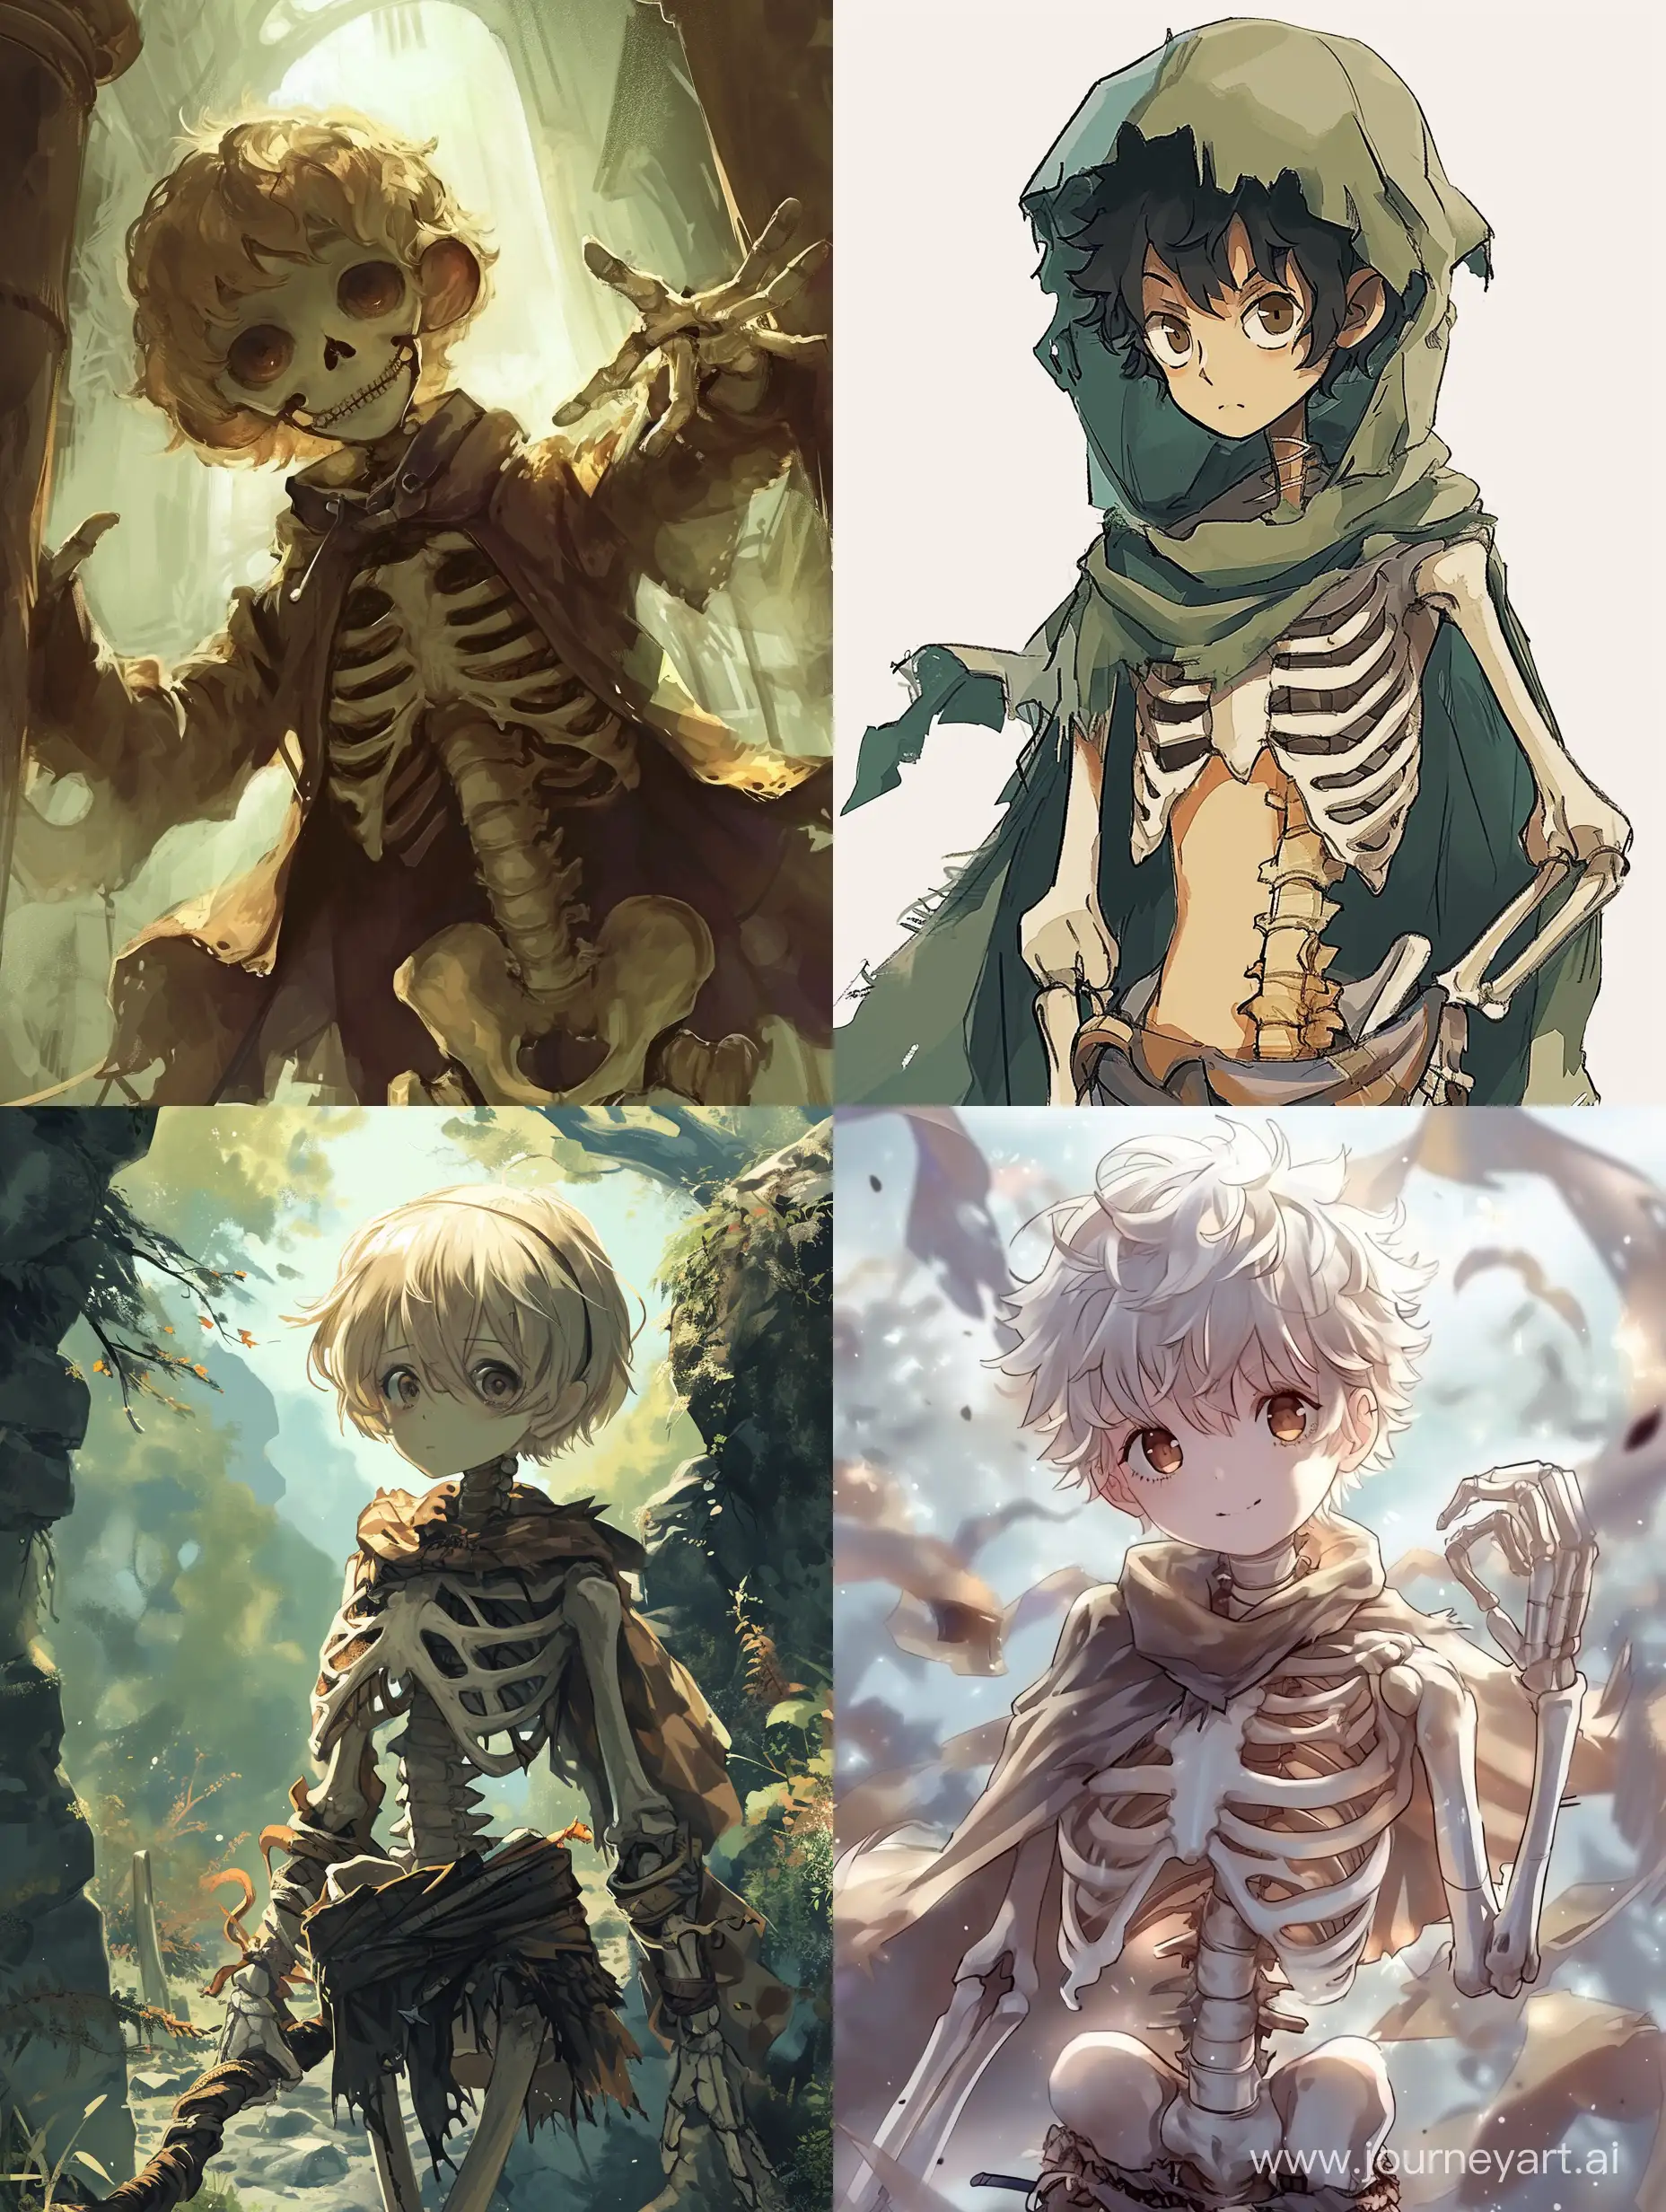 An anime style fun bones kid from a fantasy tale.